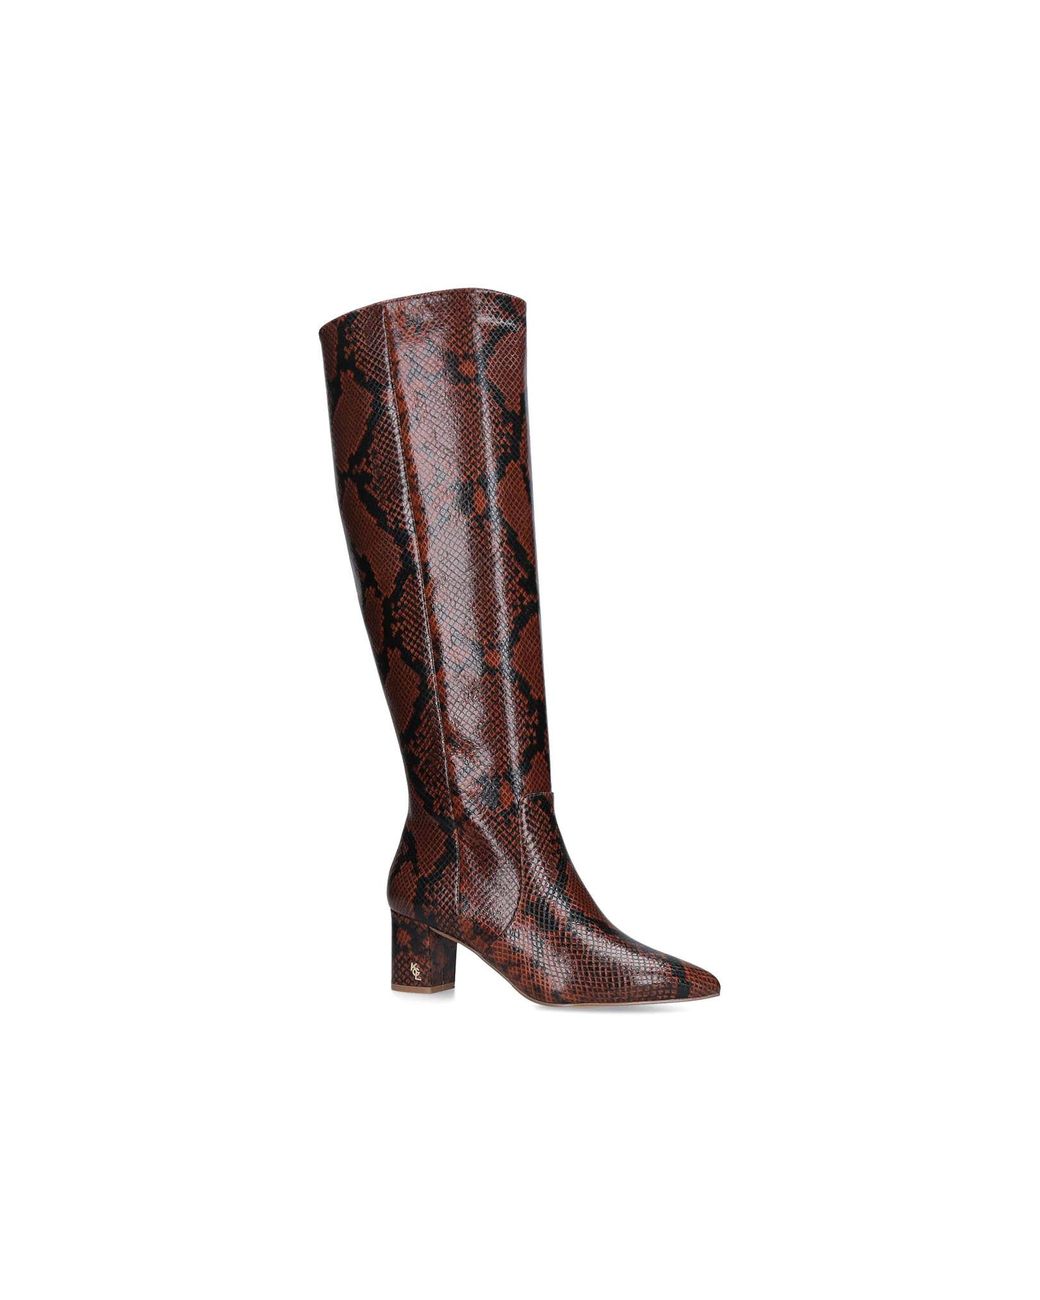 Kurt Geiger Snake Print Block Heel Knee High Boots in Brown - Save 42% -  Lyst